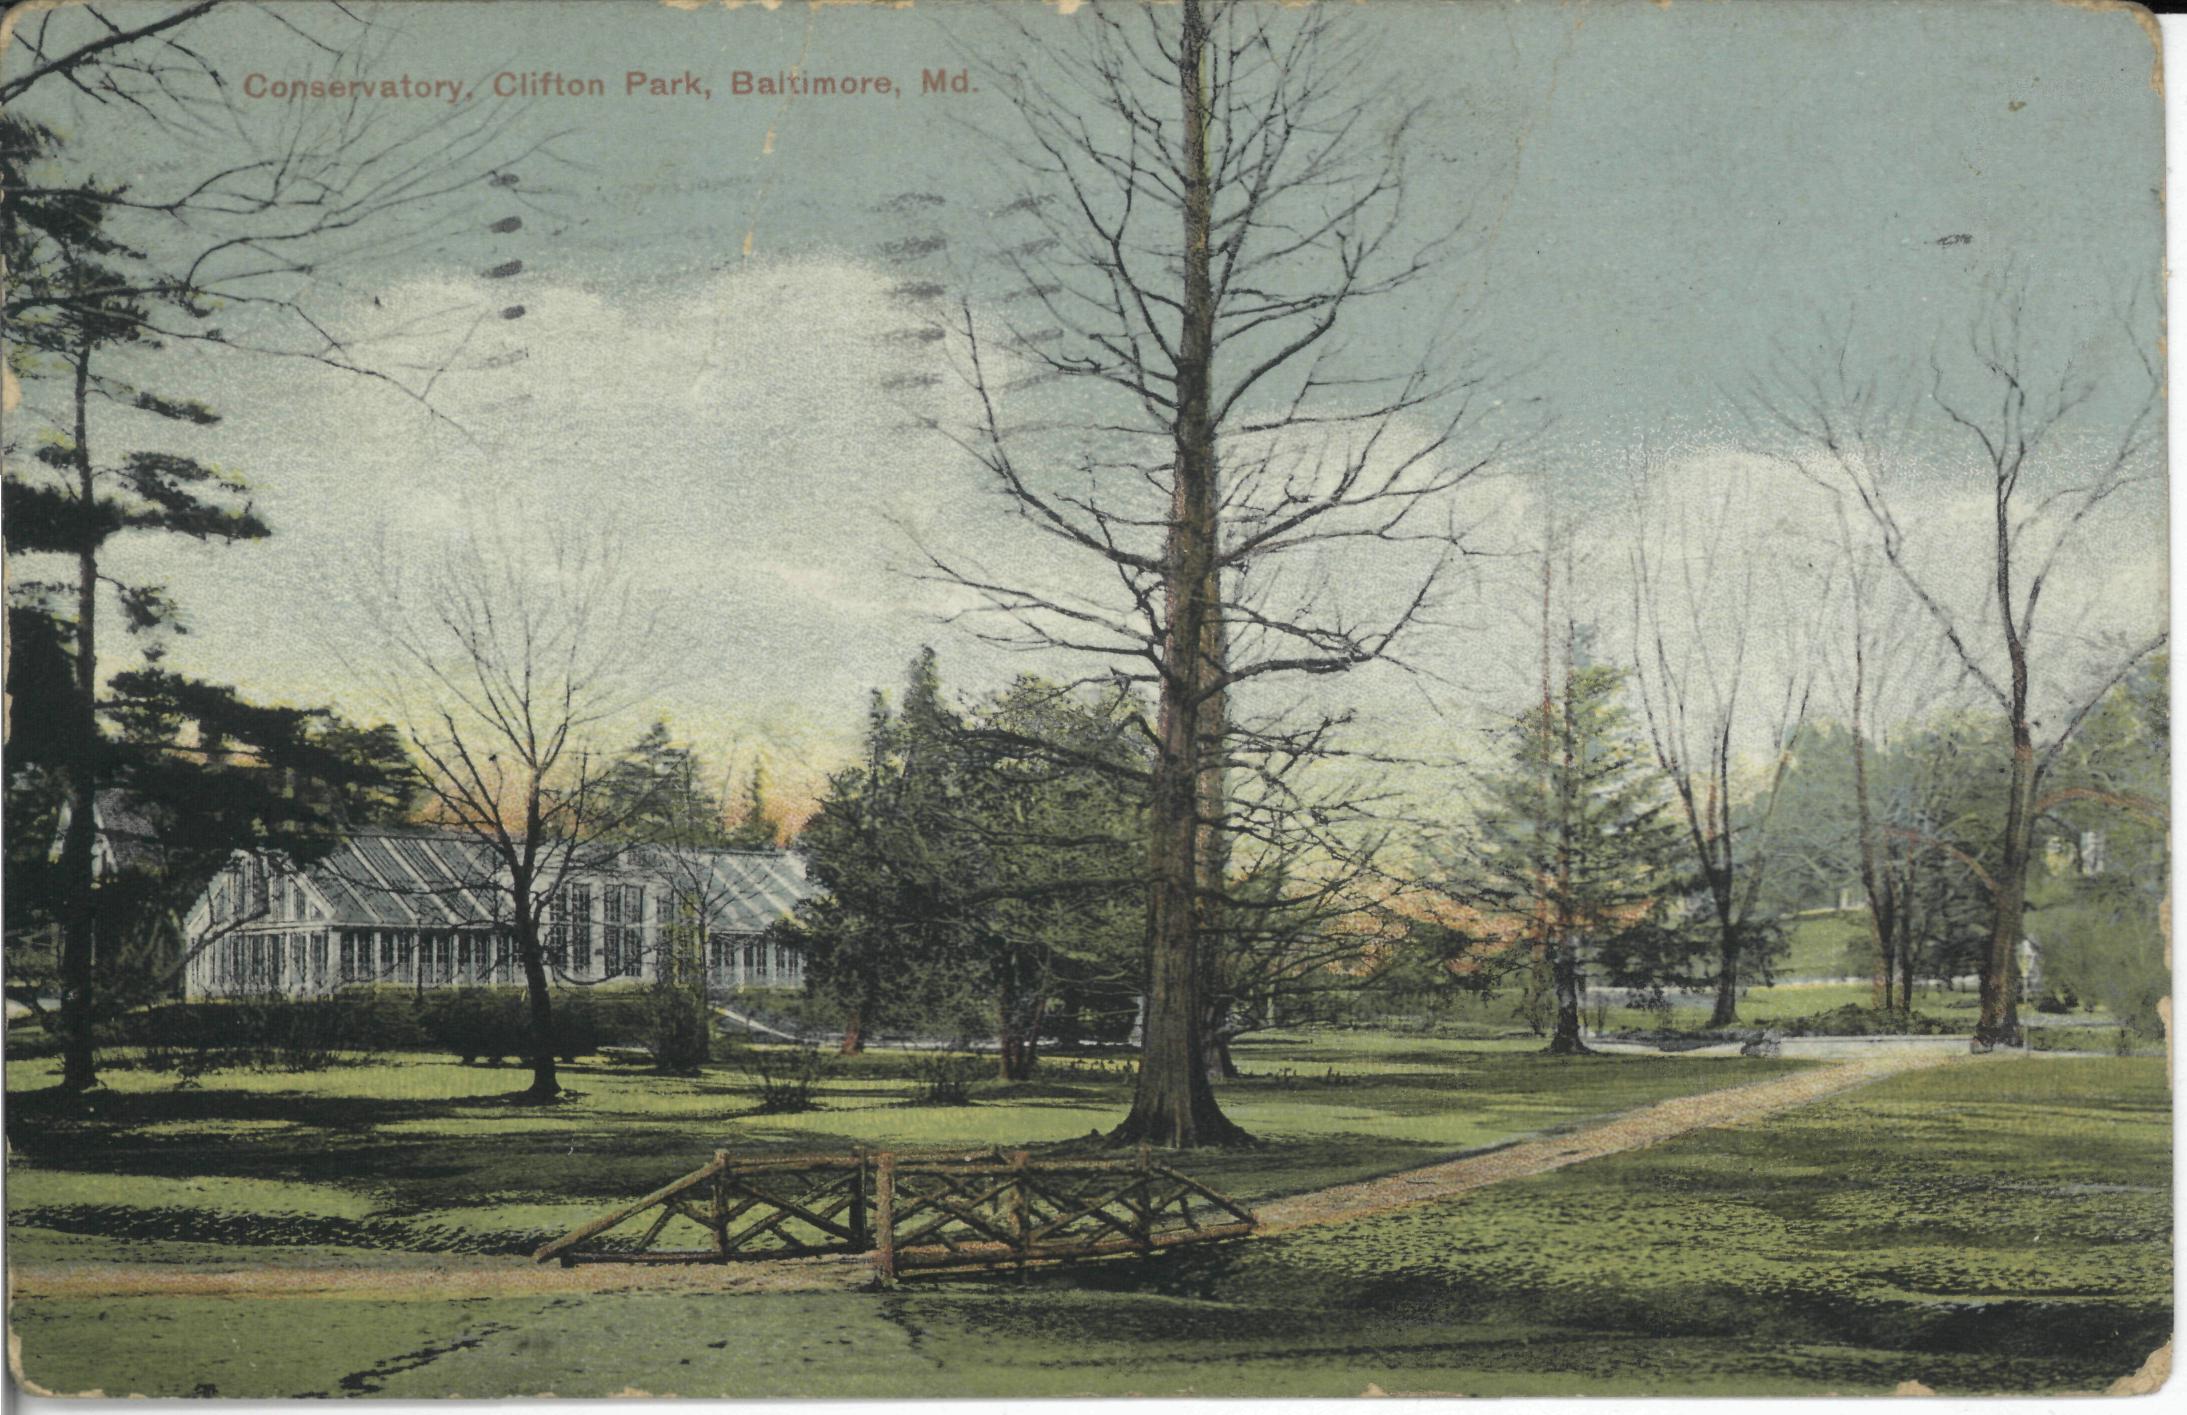 Postcard of Conservatory at Clifton Park circa 1910